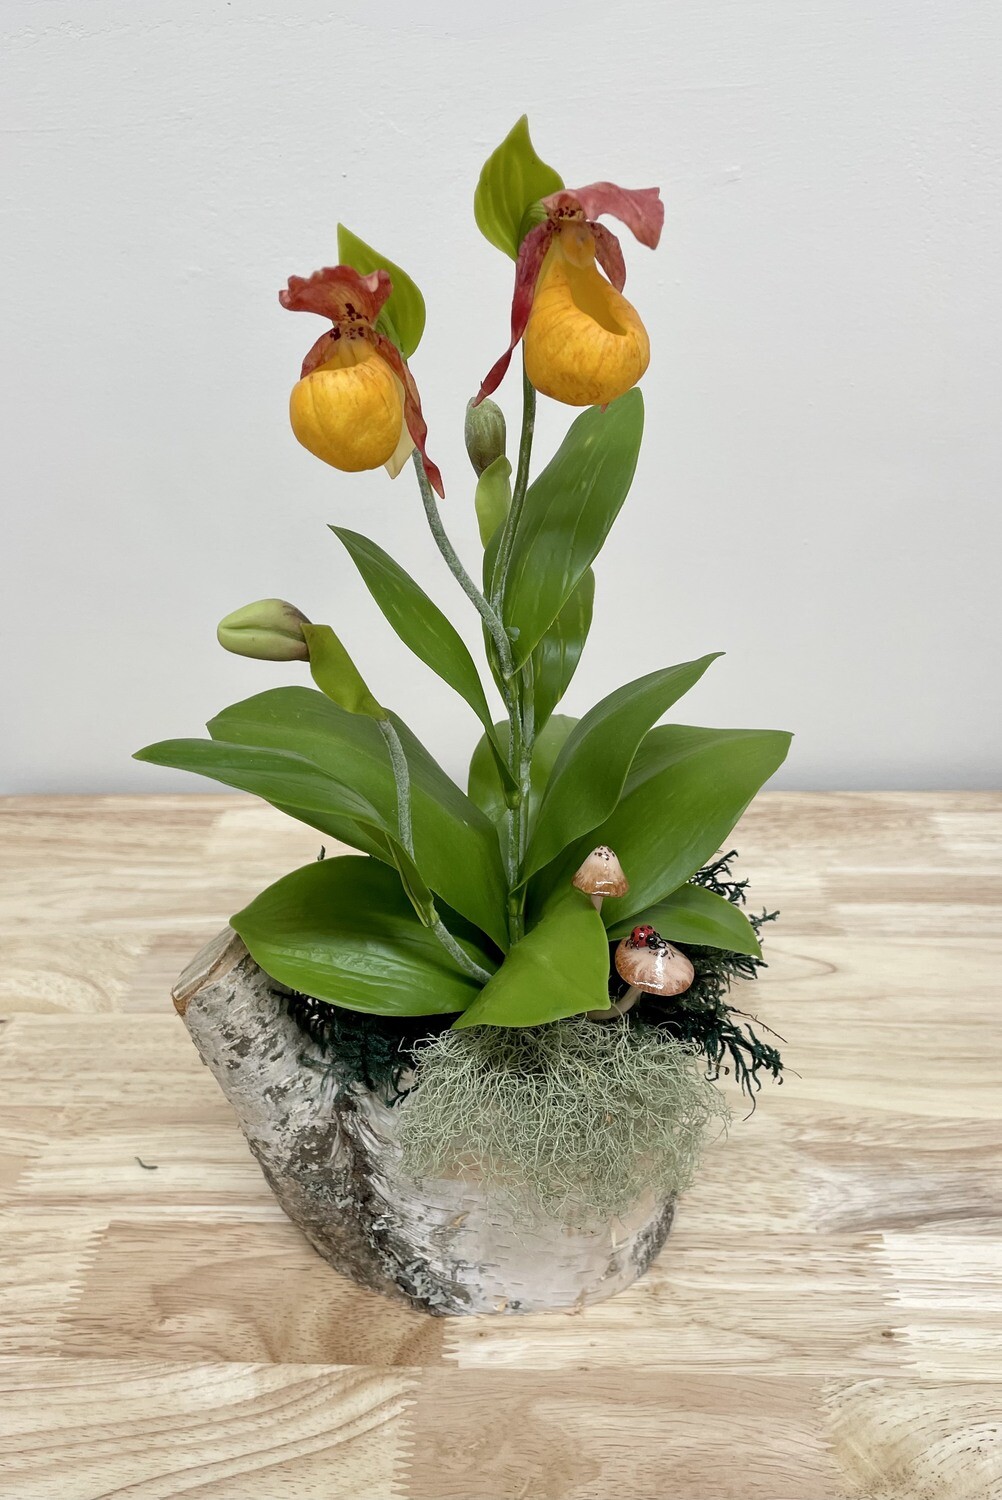 Orange Lady Slipper Orchid on Wood